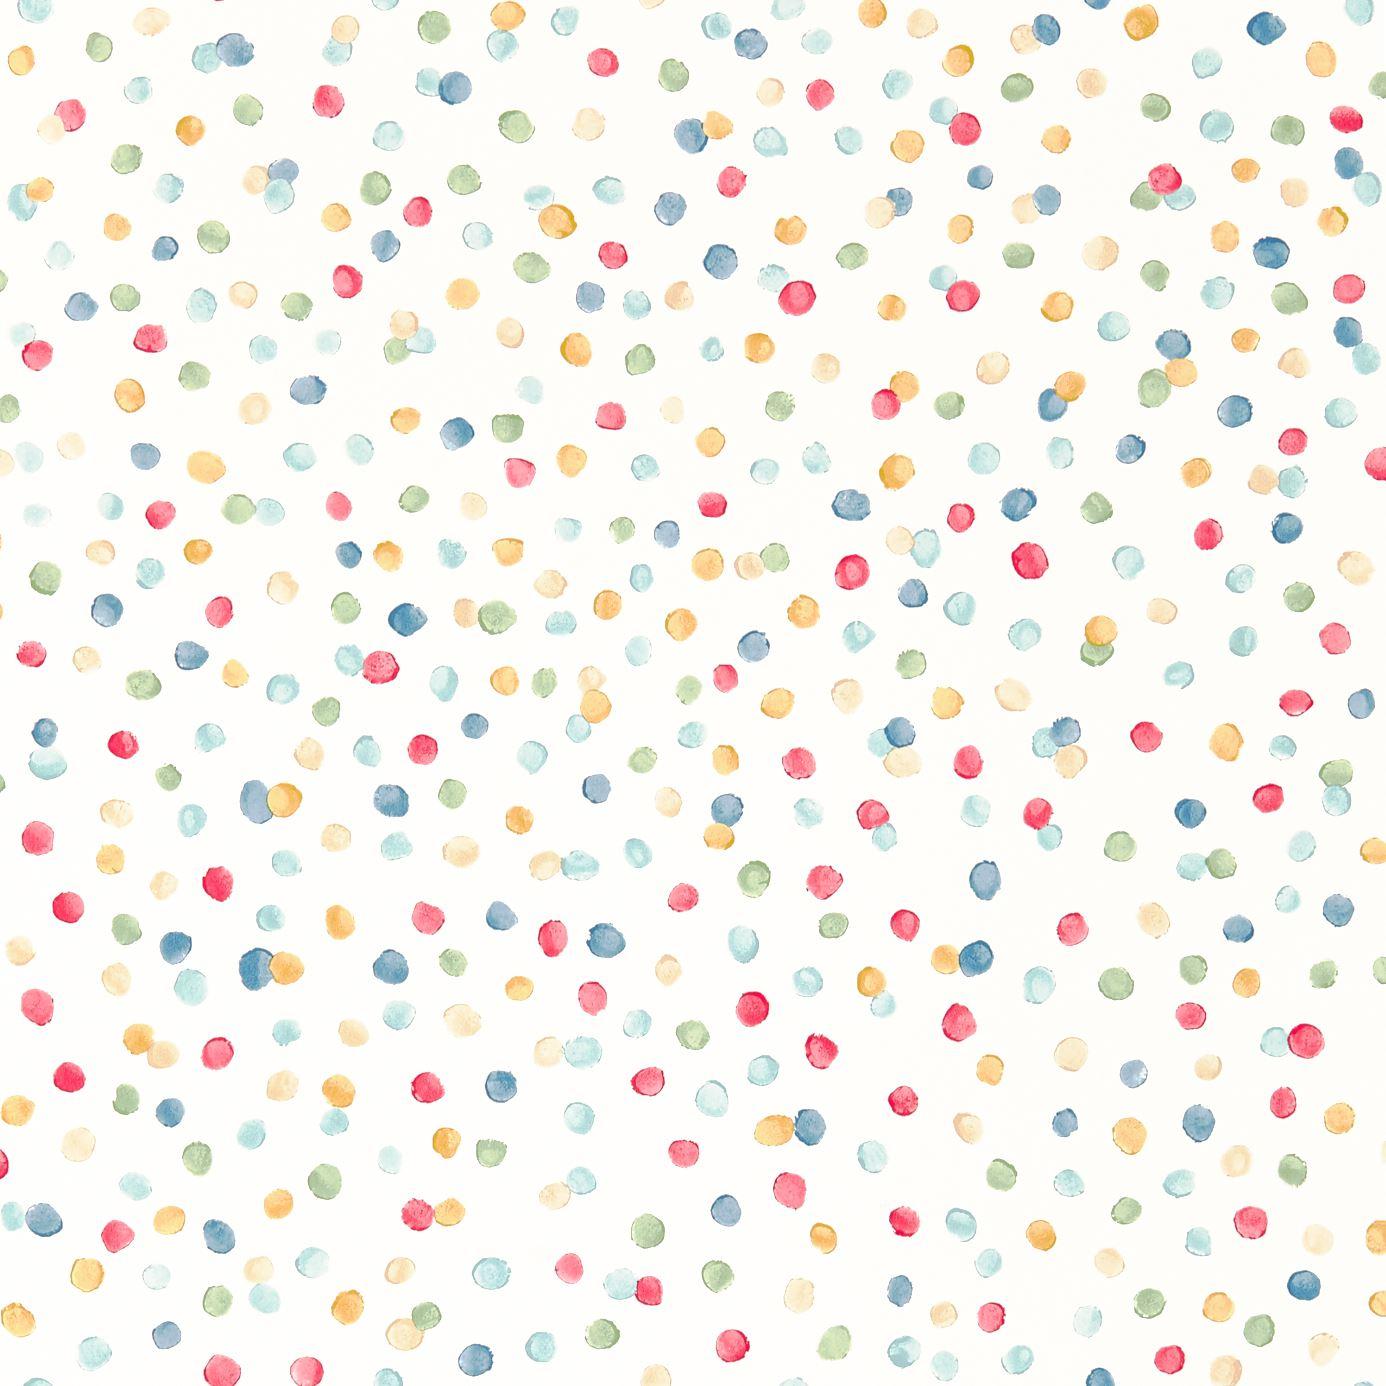 Dots WallpaperUSkY.com